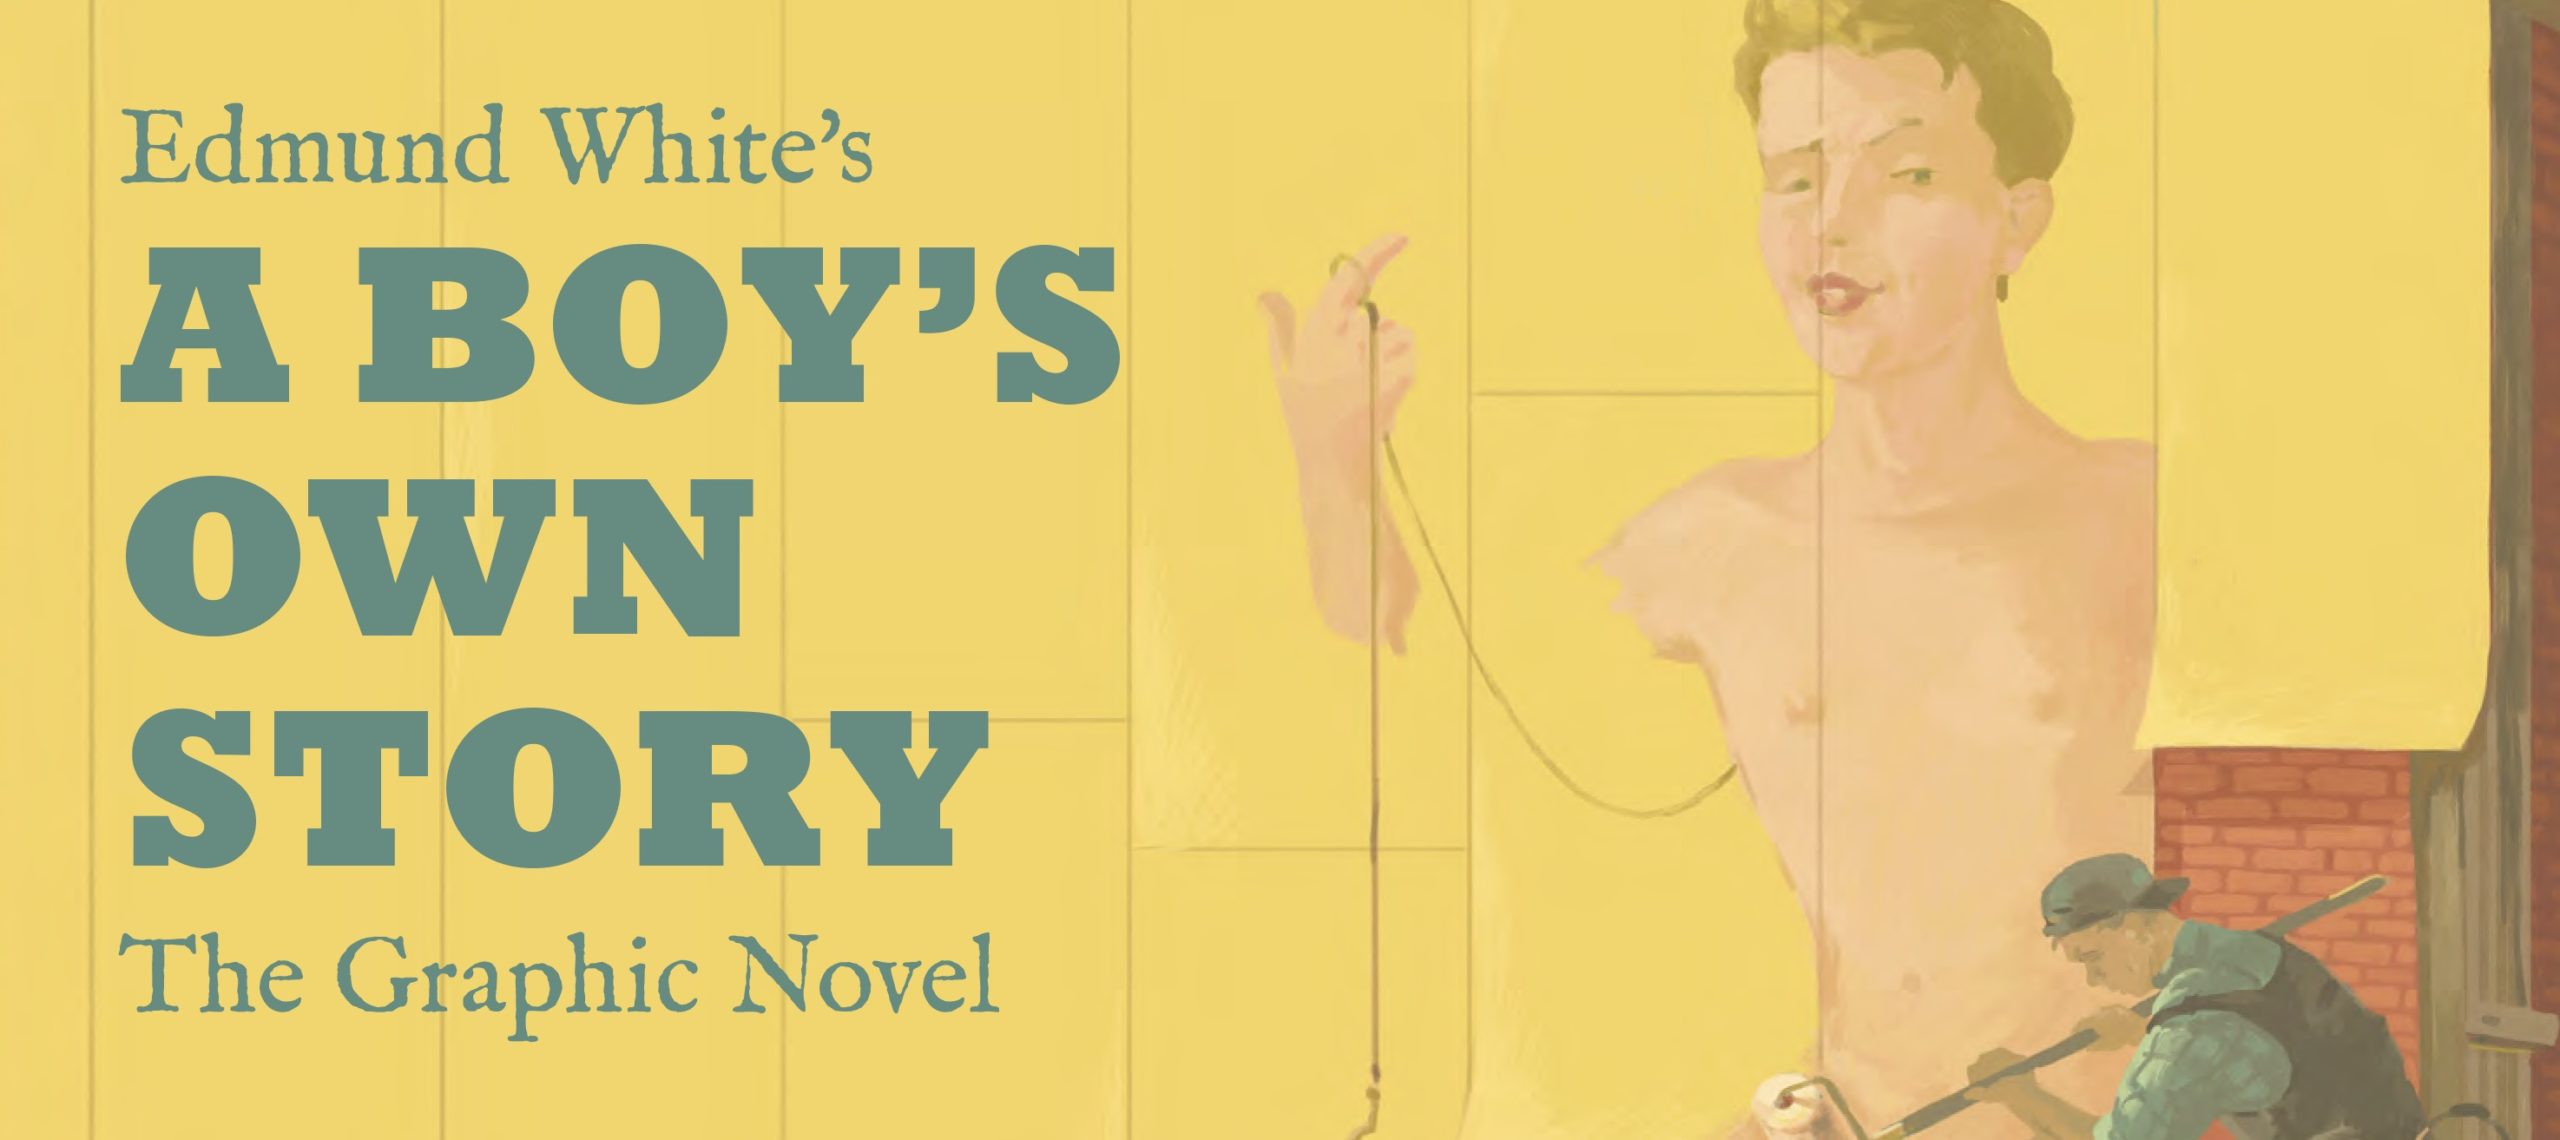 Edmund White's A Boy's Own Story: The Graphic Novel